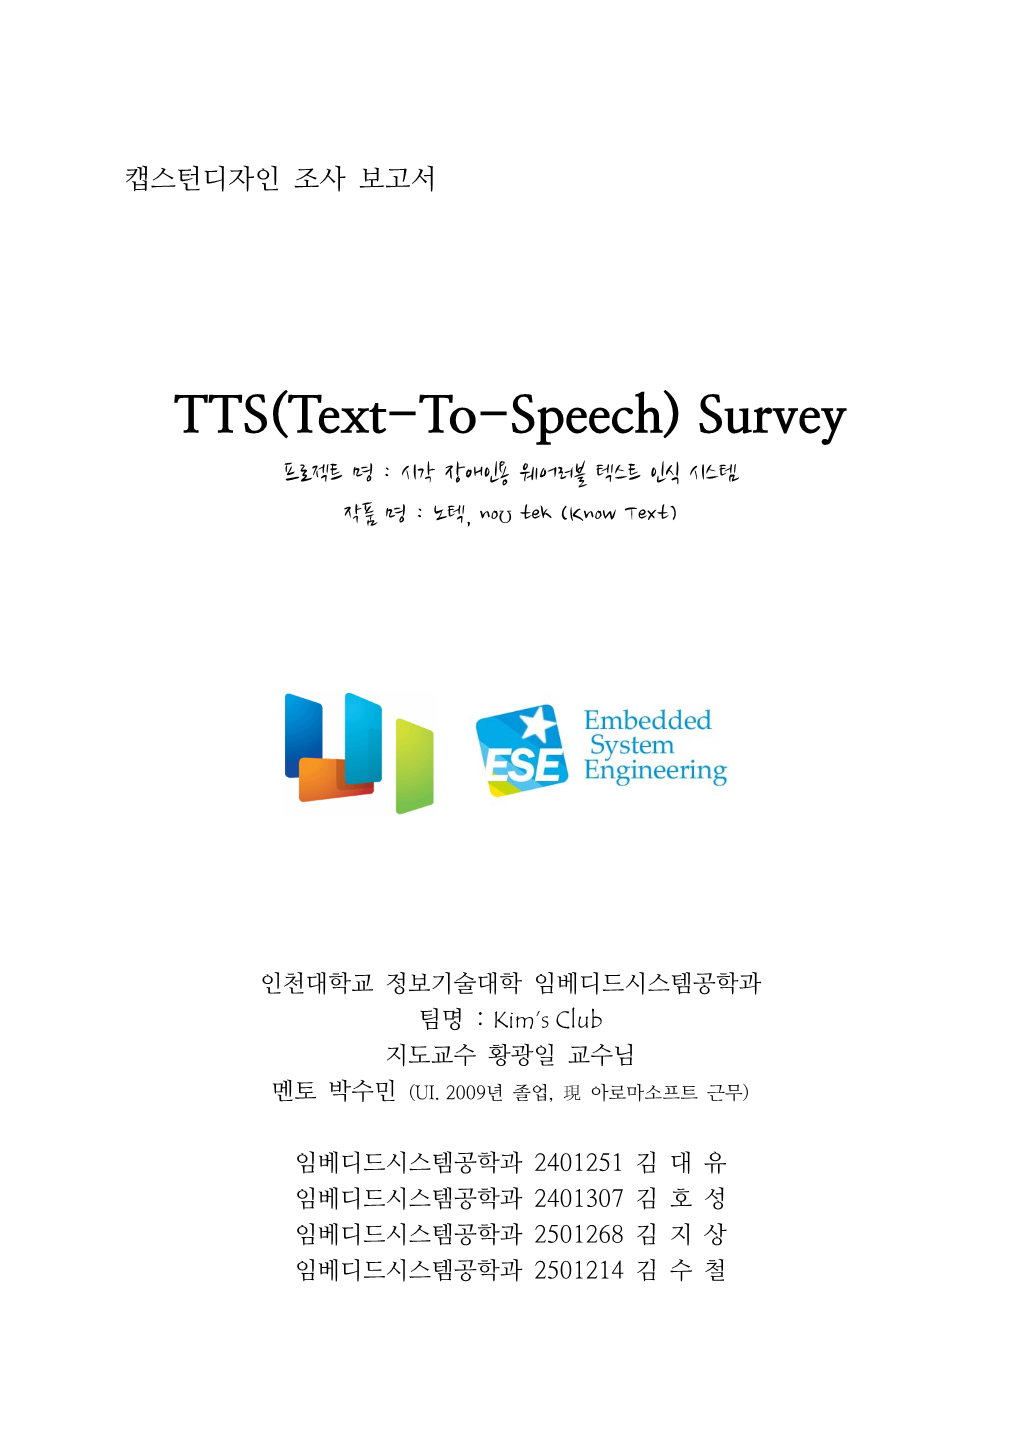 TTS(Text-To-Speech) Survey 프로젝트 명 : 시각 장애인용 웨어러블 텍스트 인식 시스템 작품 명 : 노텍, Noʊ Tek (Know Text)